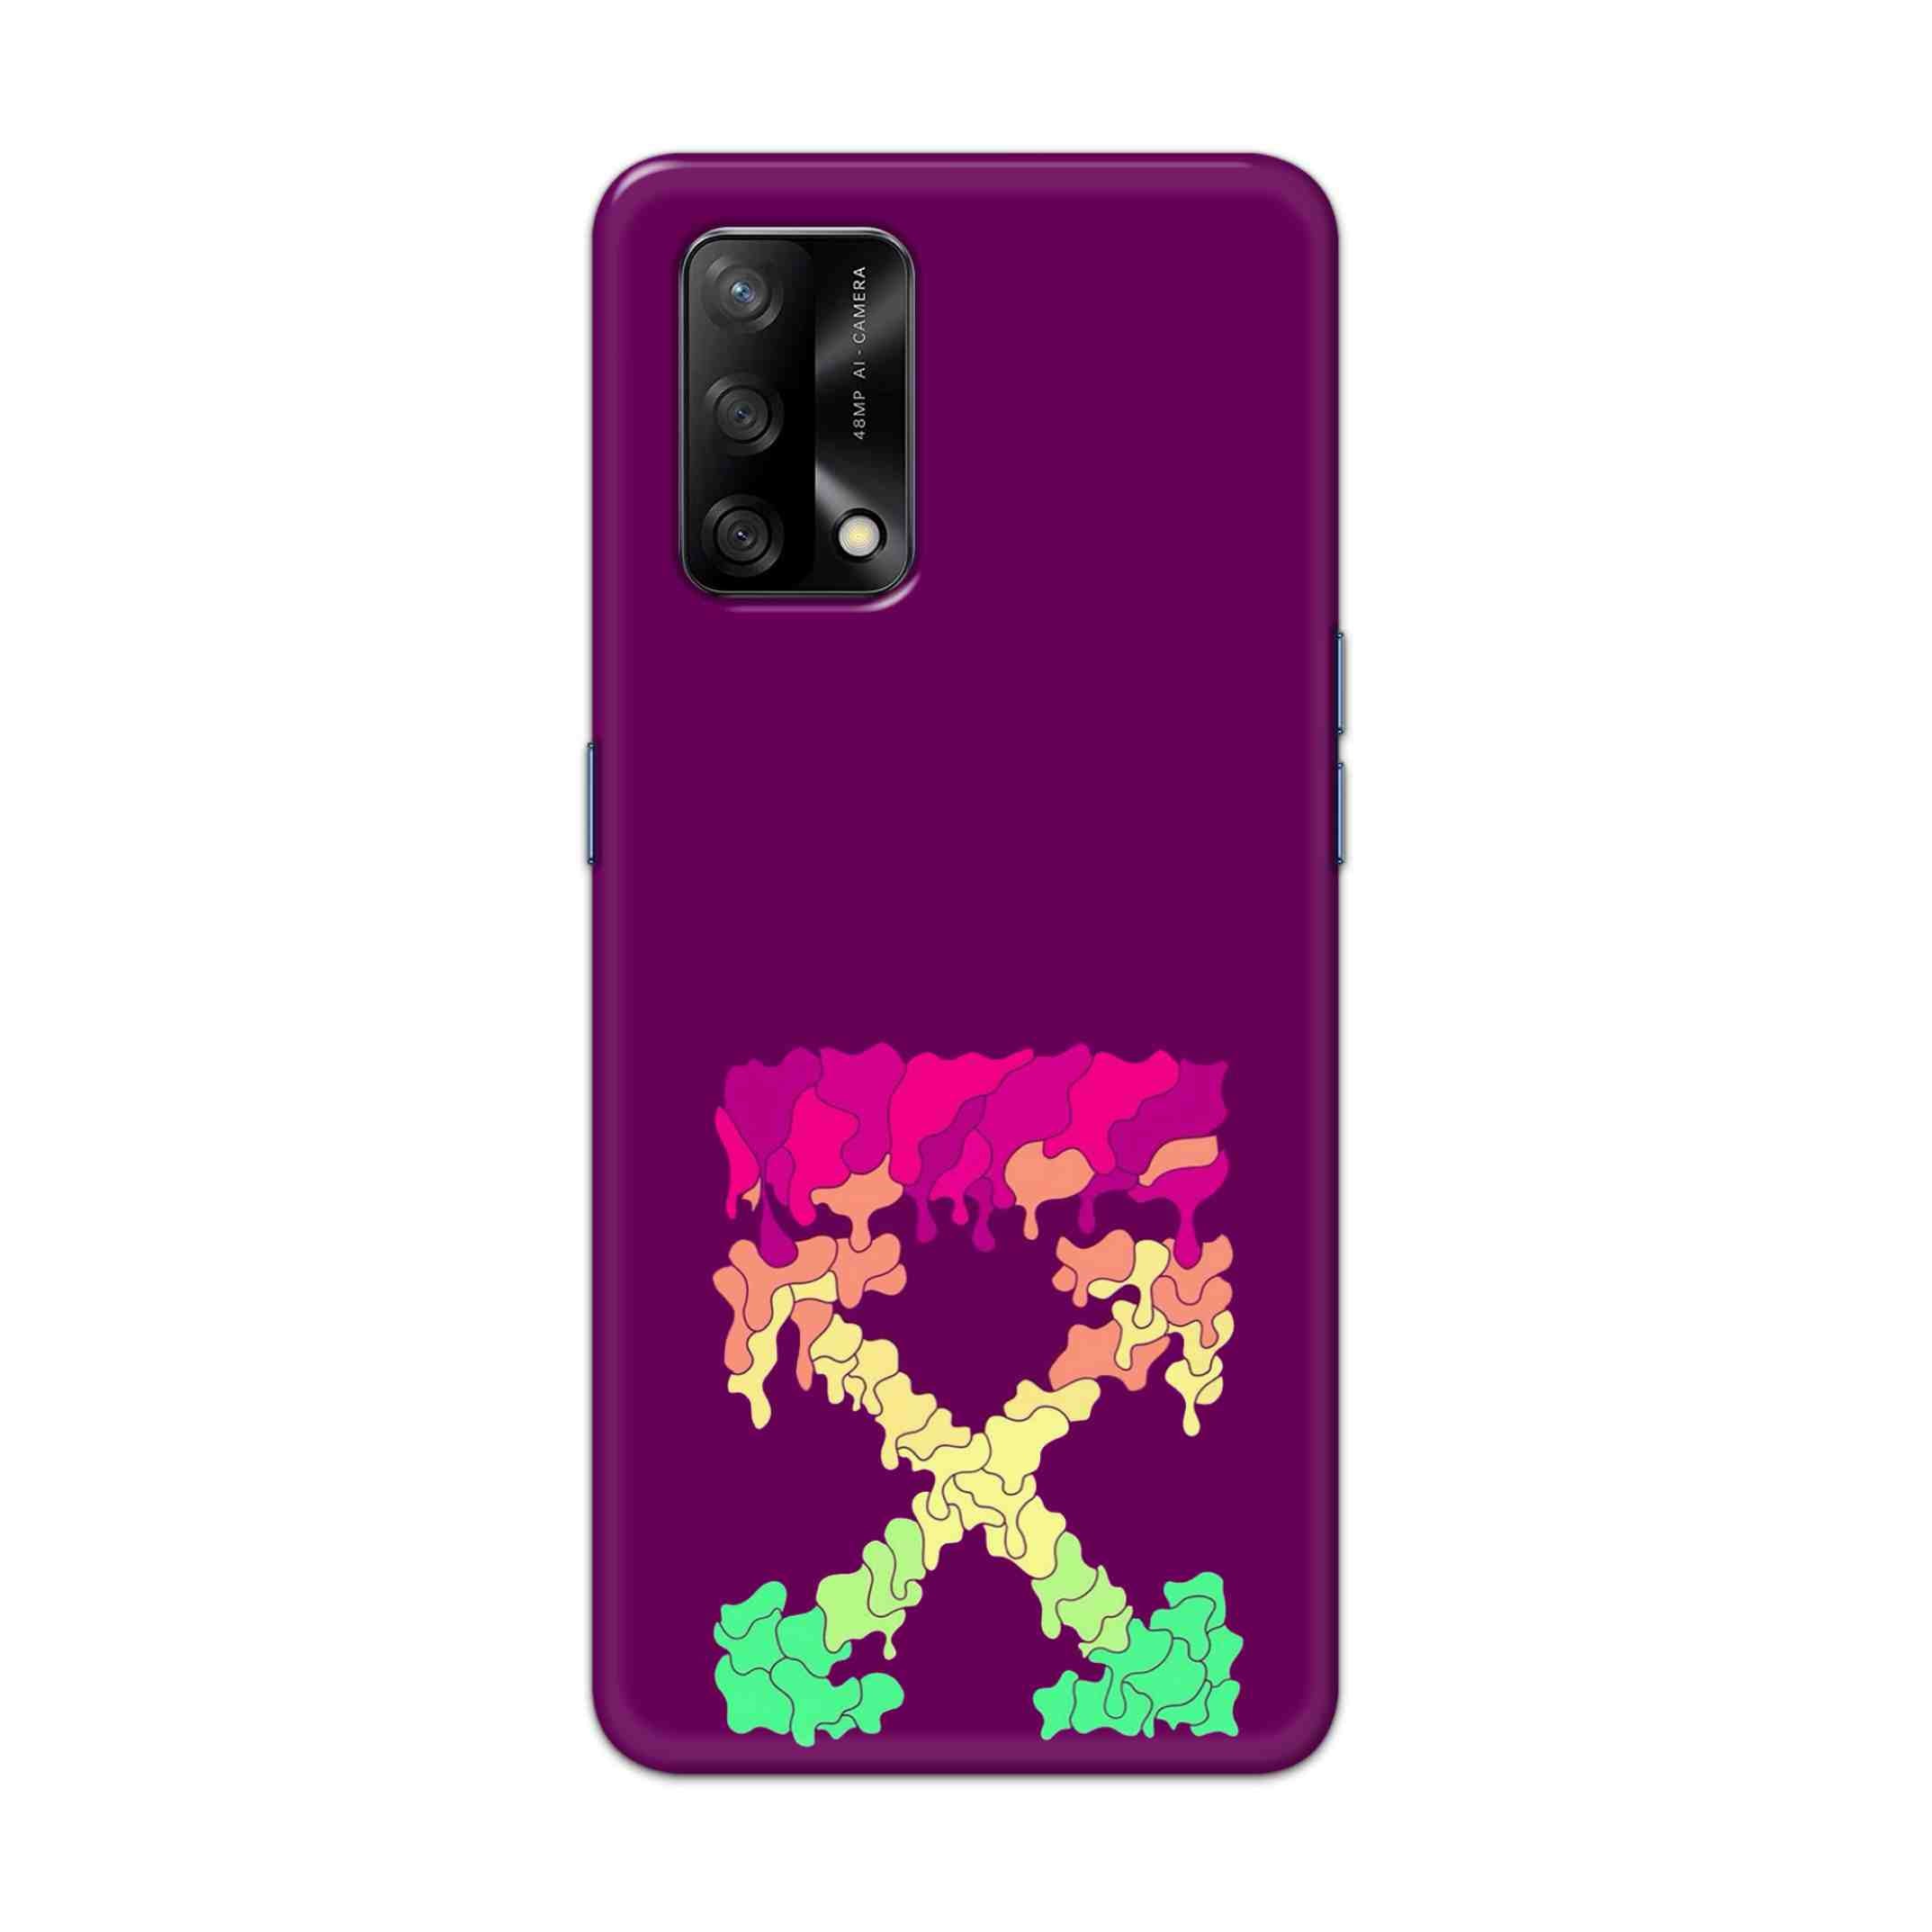 Buy X.O Hard Back Mobile Phone Case Cover For Oppo F19 Online